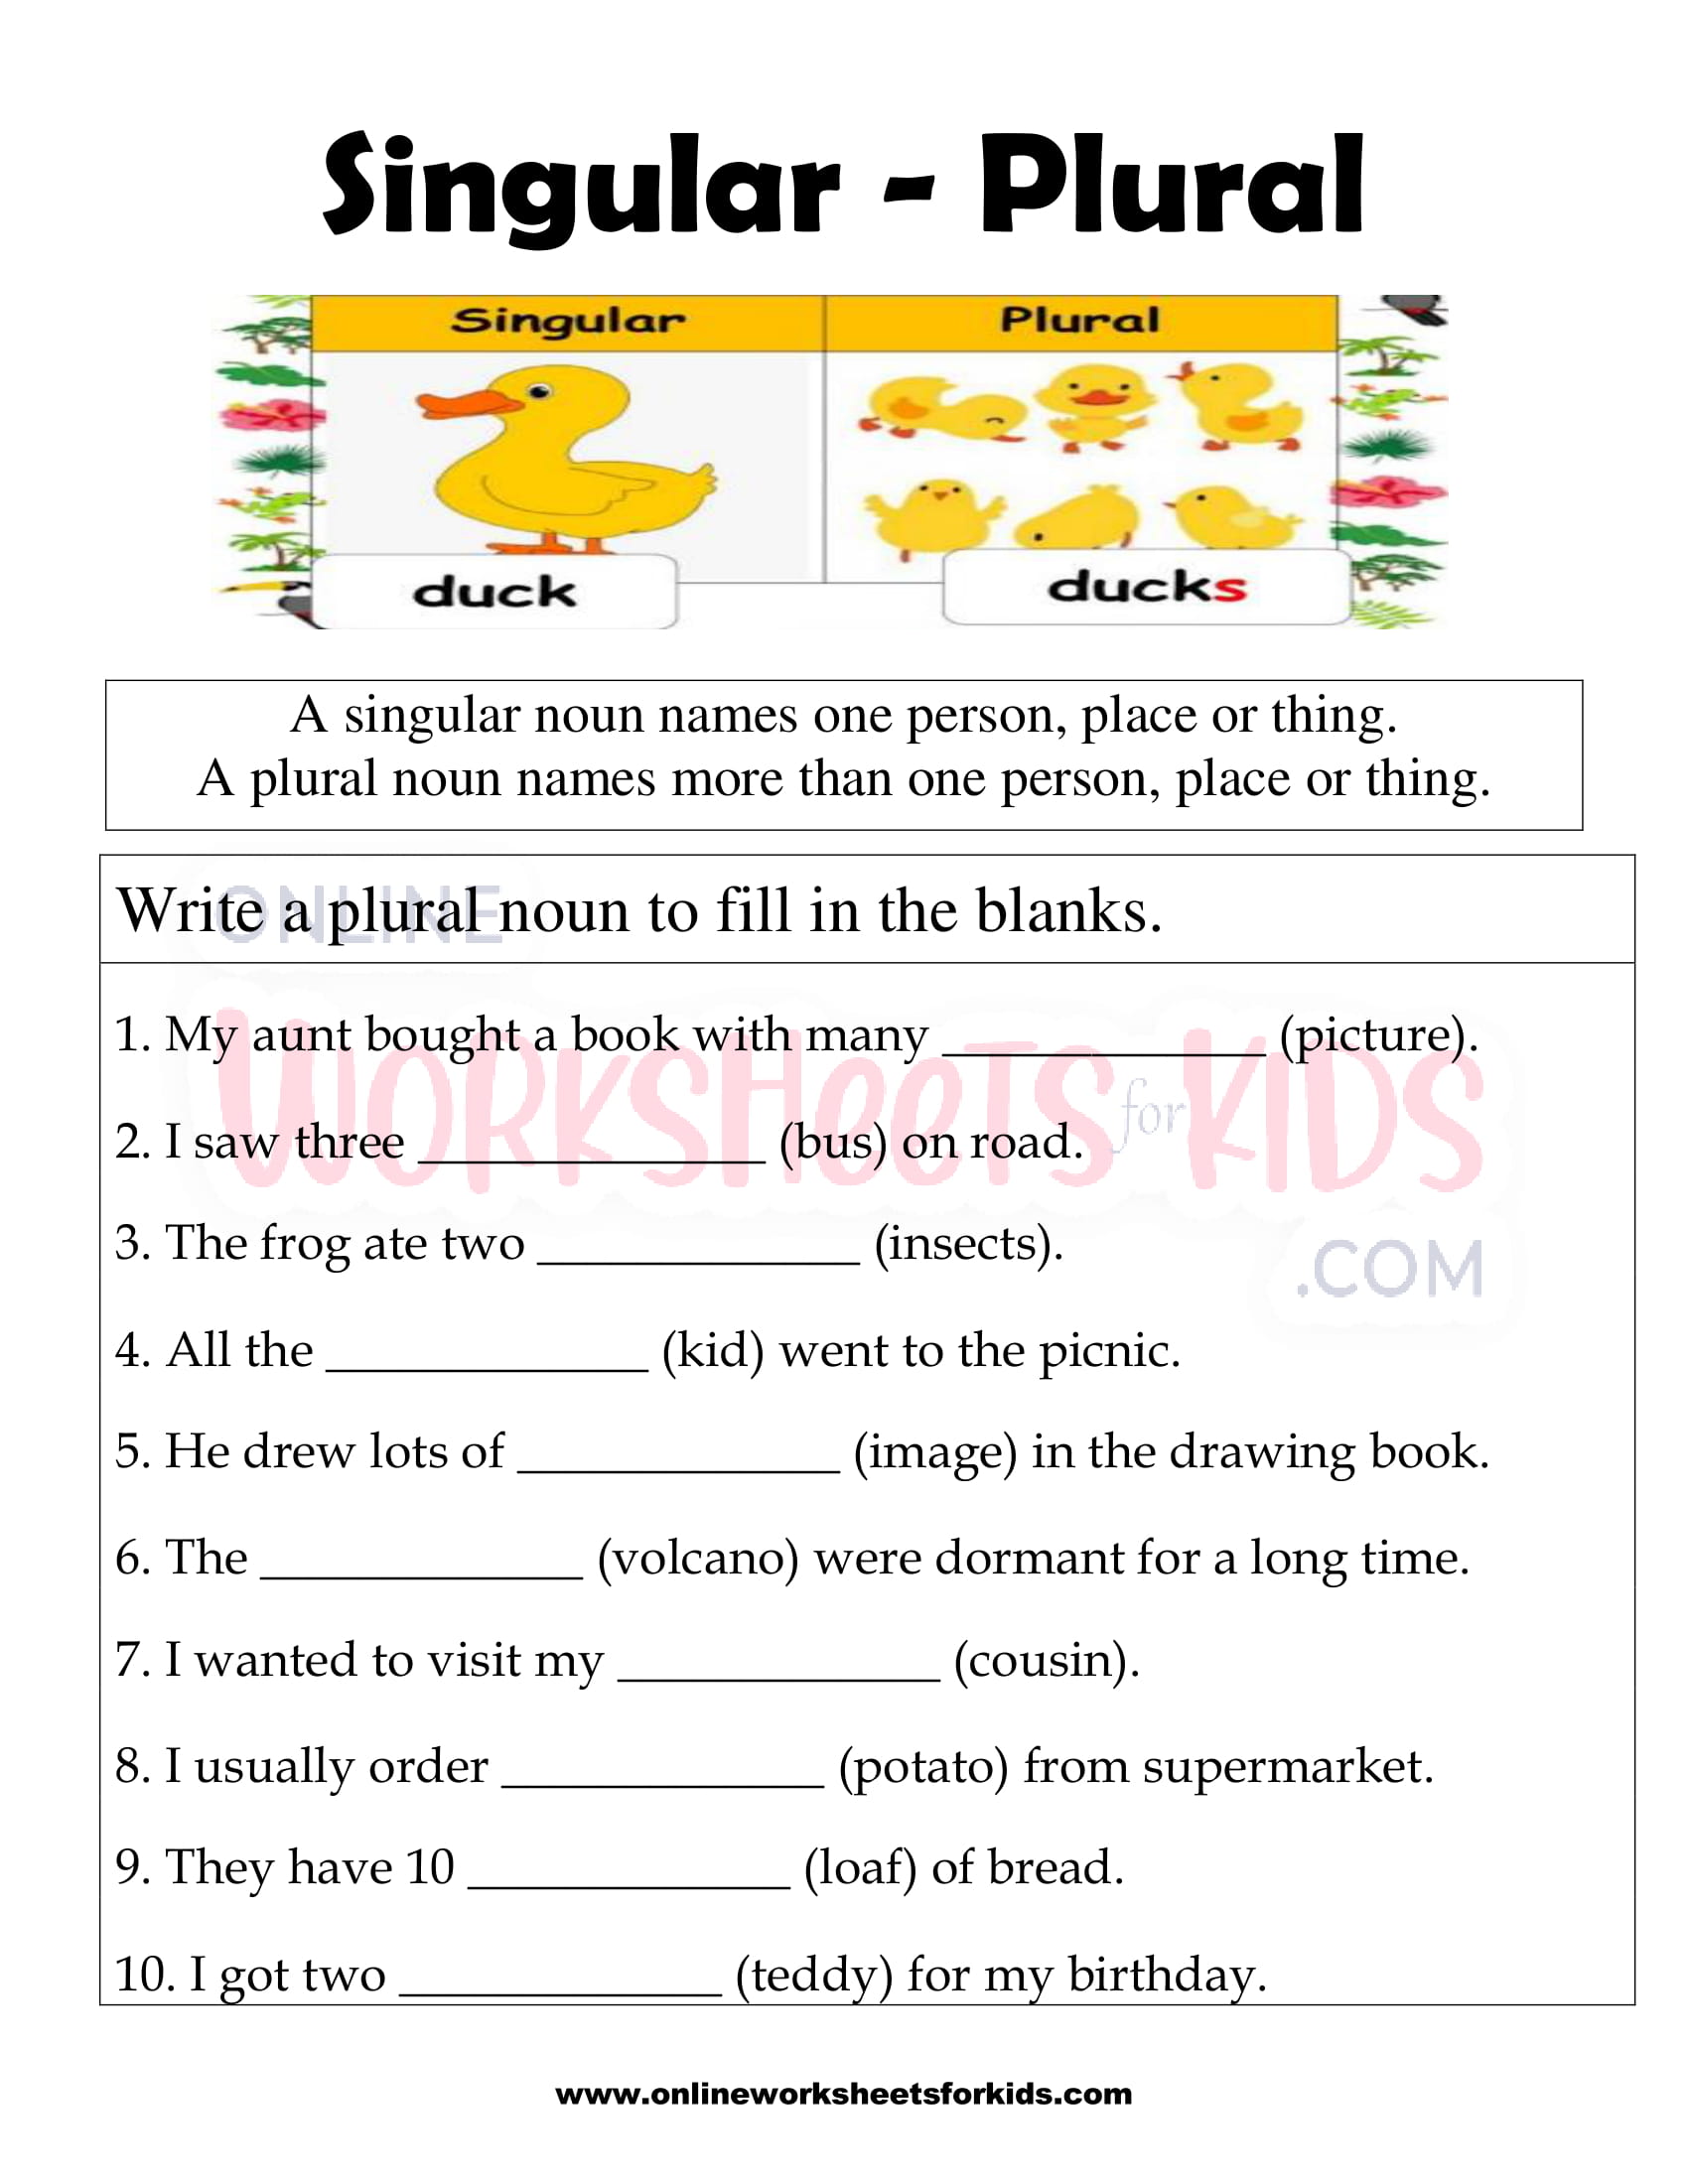 singular-and-plural-nouns-fb-worksheet-3